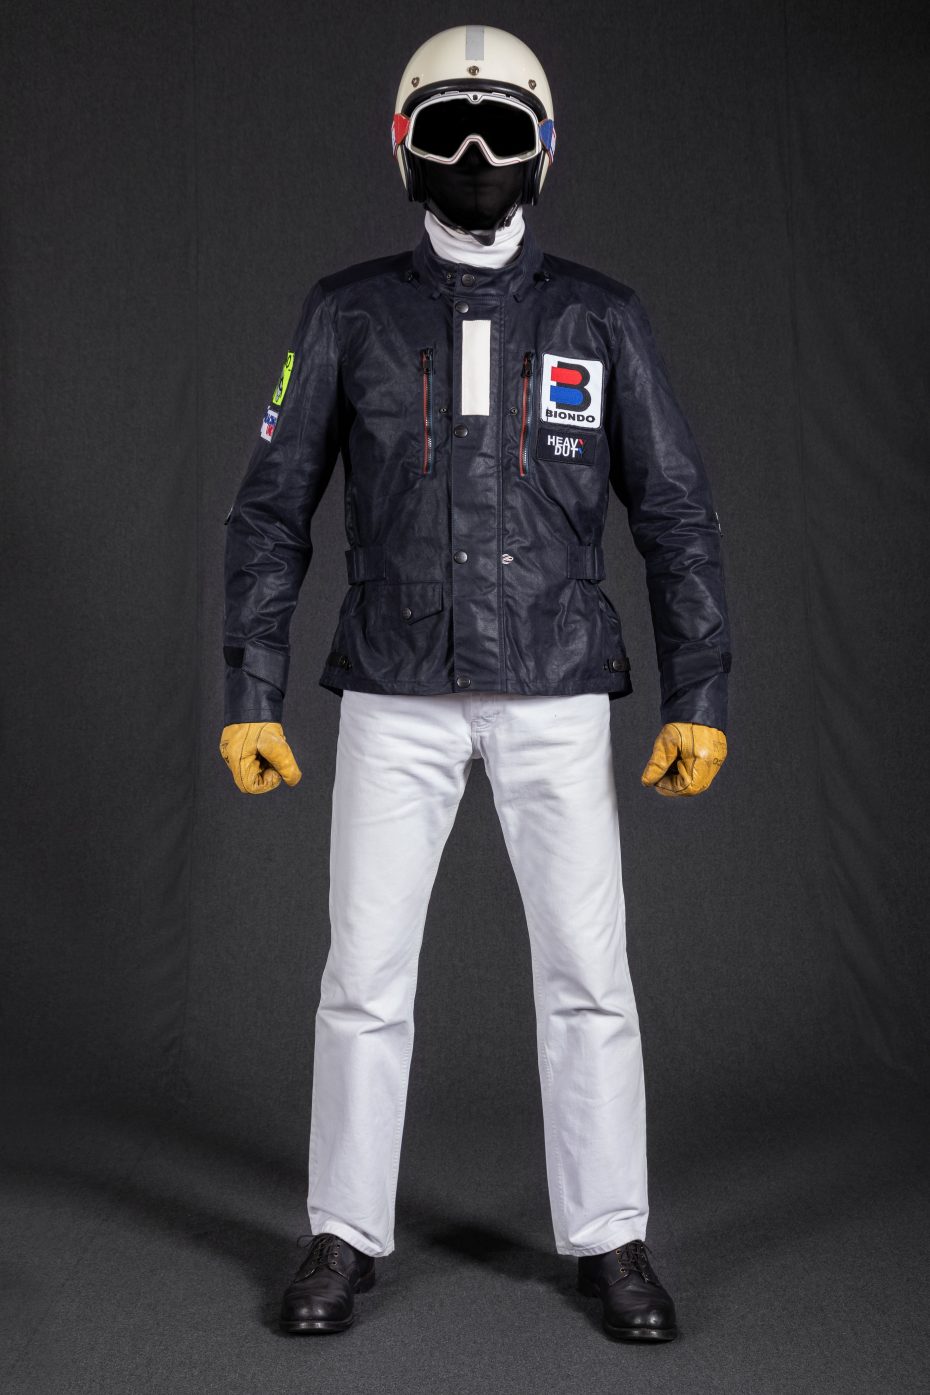 BiondoEndurance_Motorräder_GB_0009_Jacket-MkIII_RacingUnit_NavyBlue_CottonCanvas_Portrait_Front